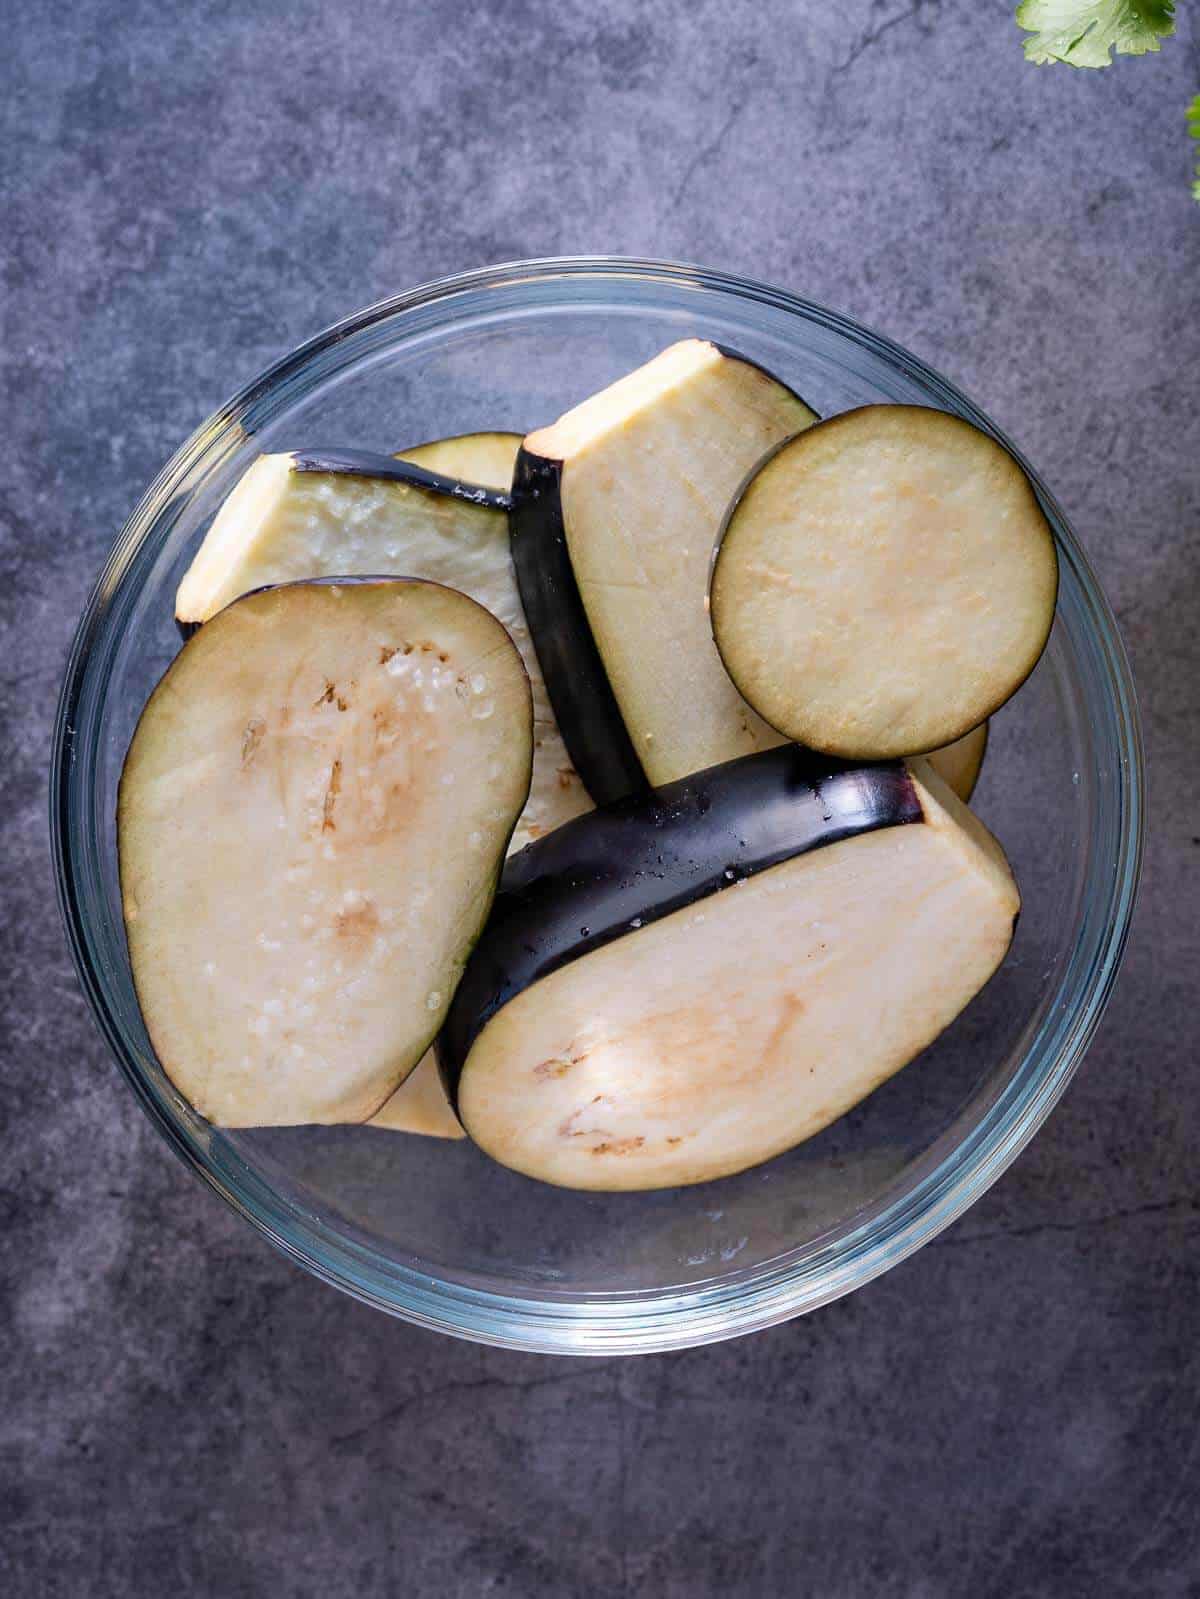 optionally add some coarse salt to make the eggplants less bitter.